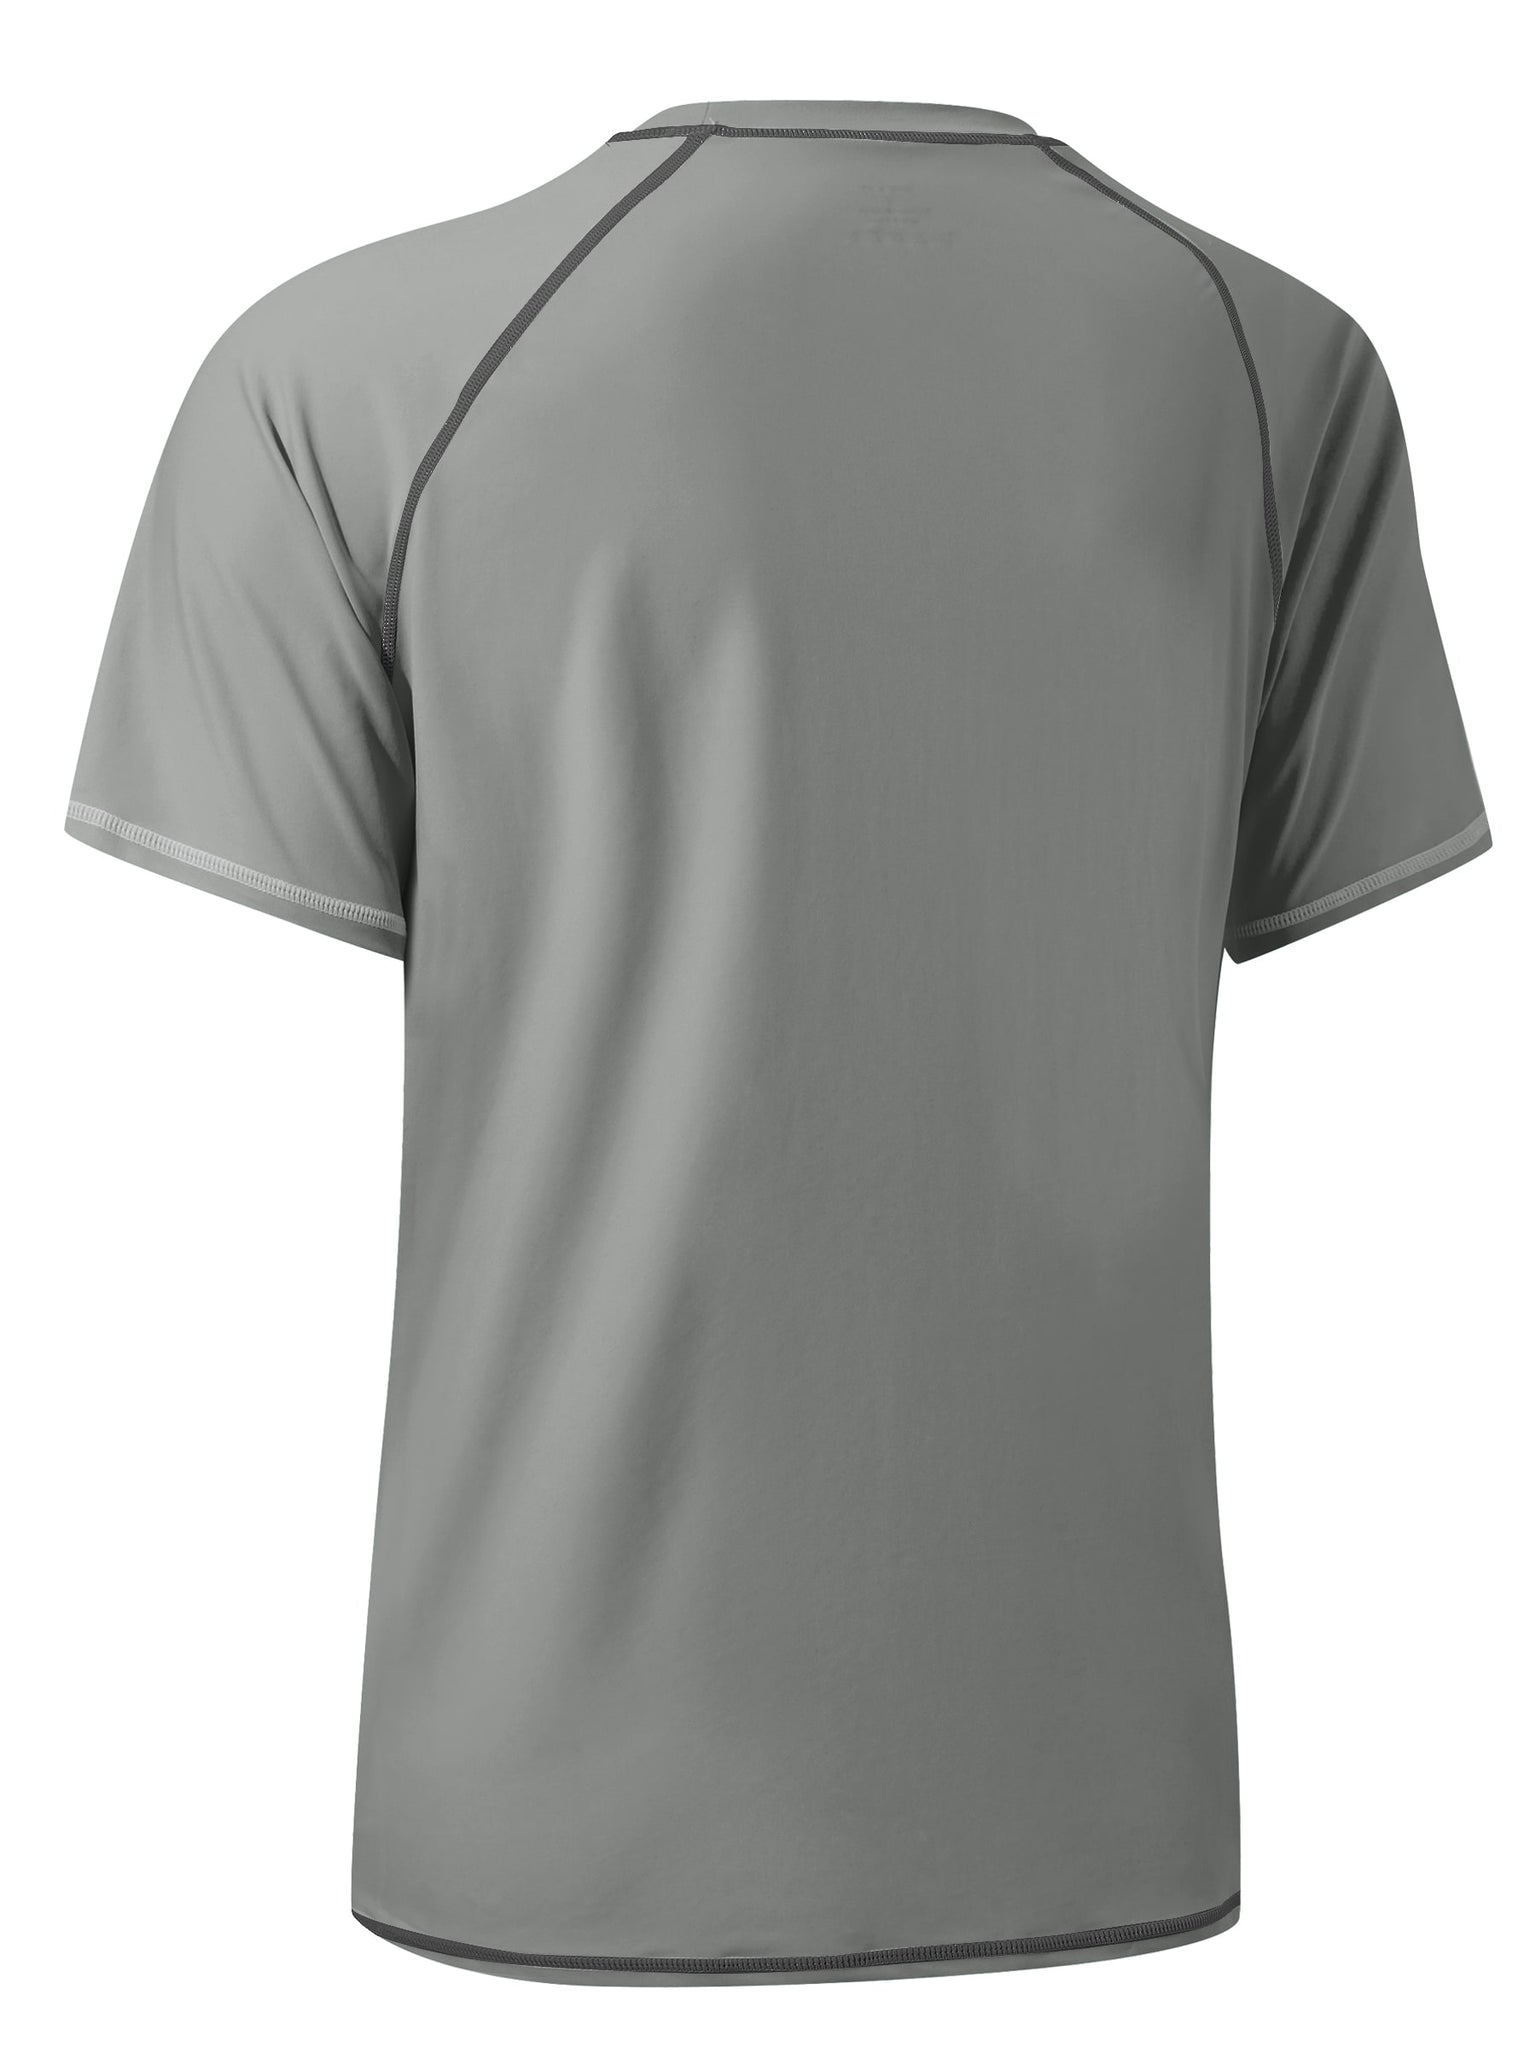 Men's Sun Protection Short Sleeve Shirt_Gray_detail2